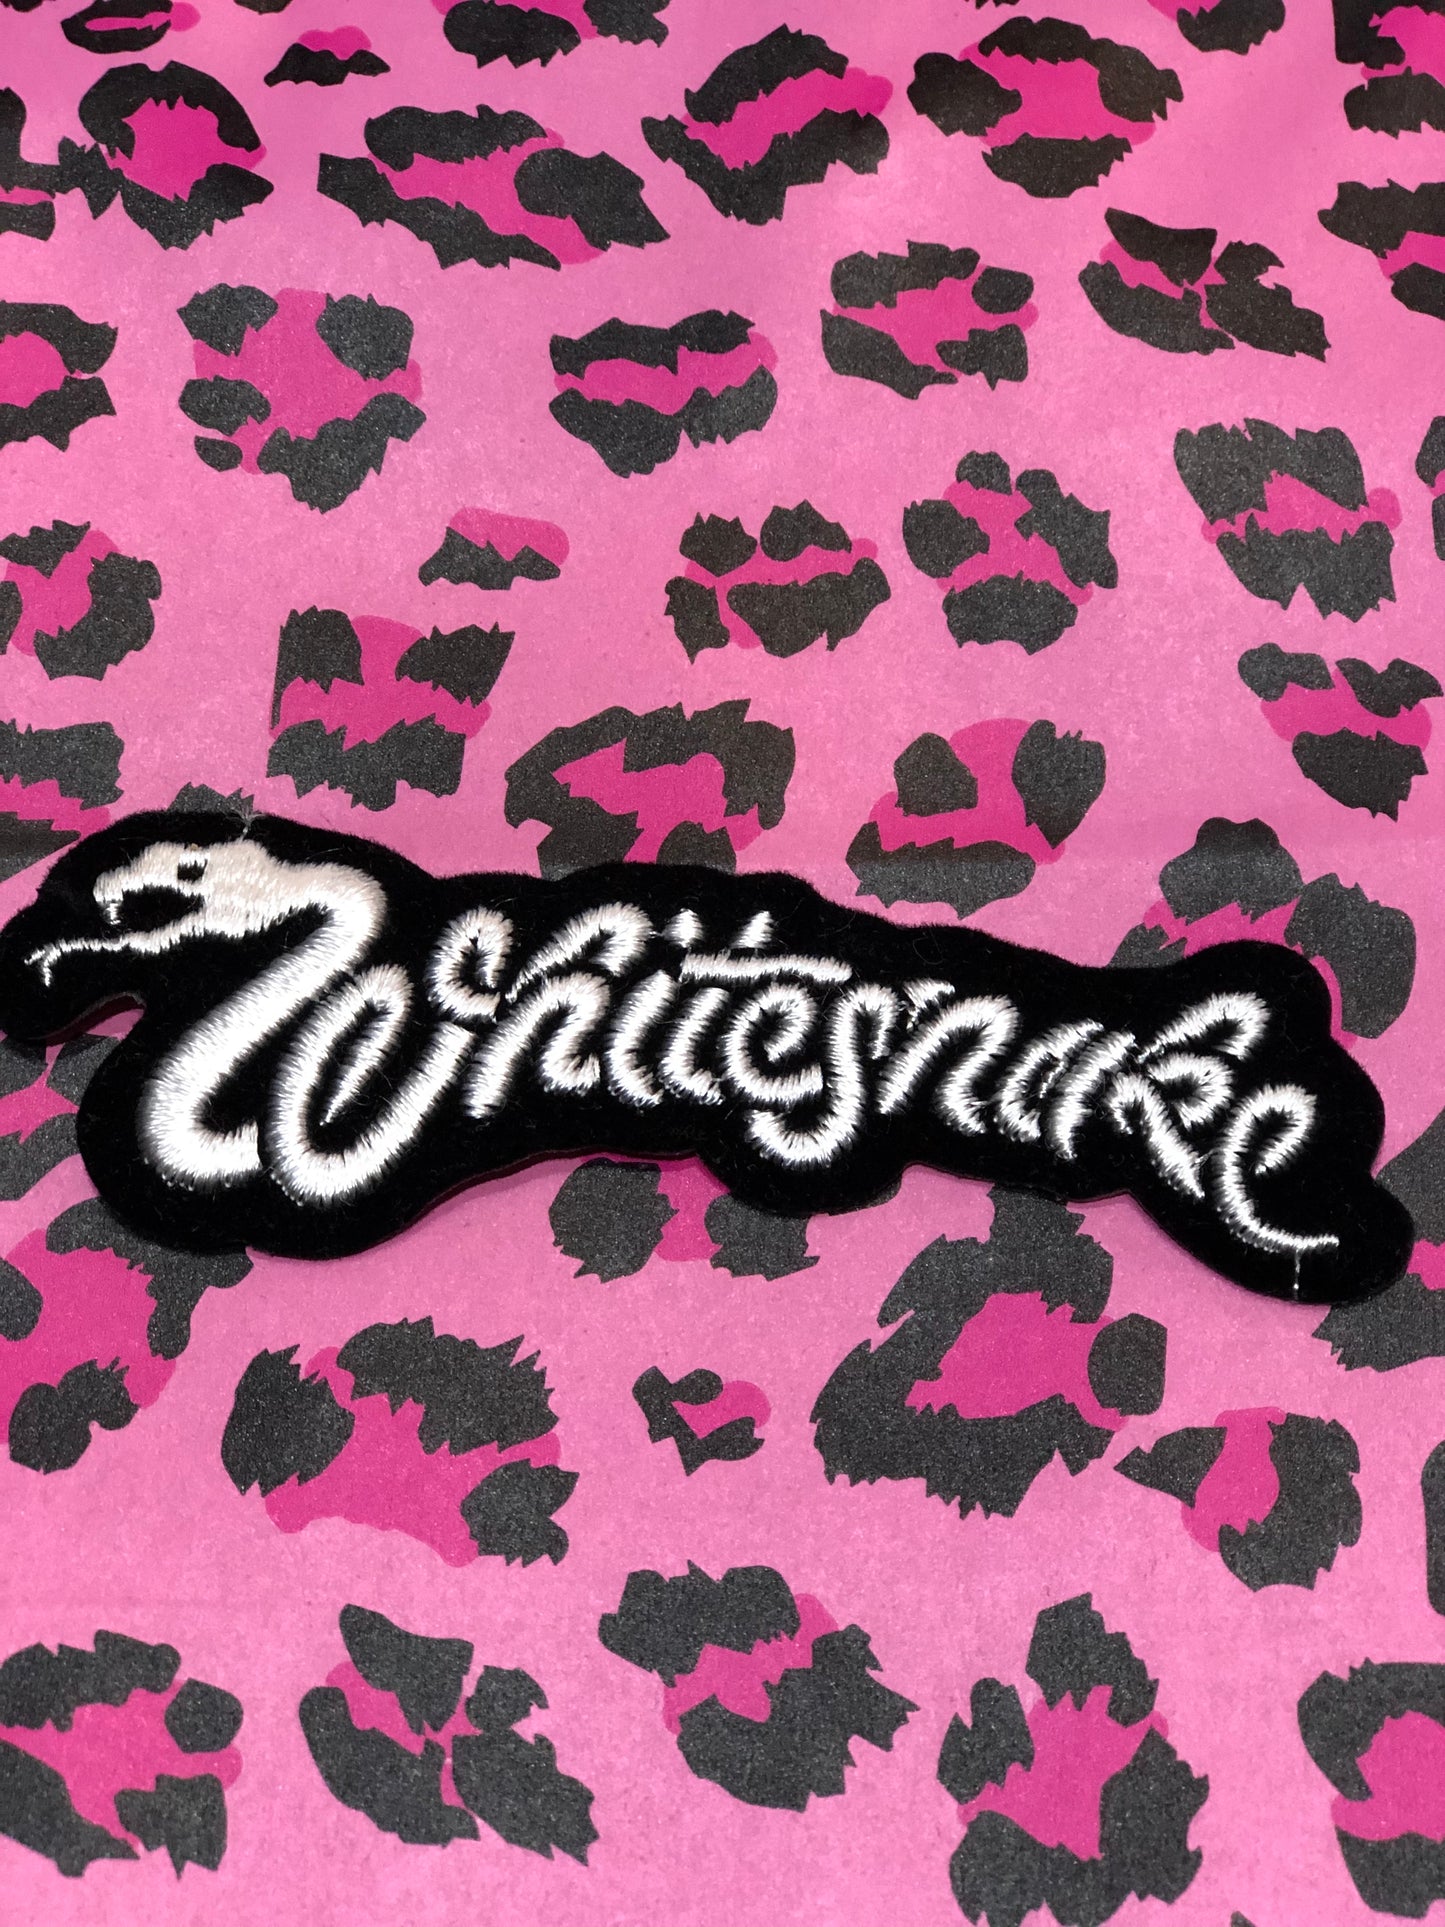 Vintage 80s Whitesnake Patch - Spark Pretty